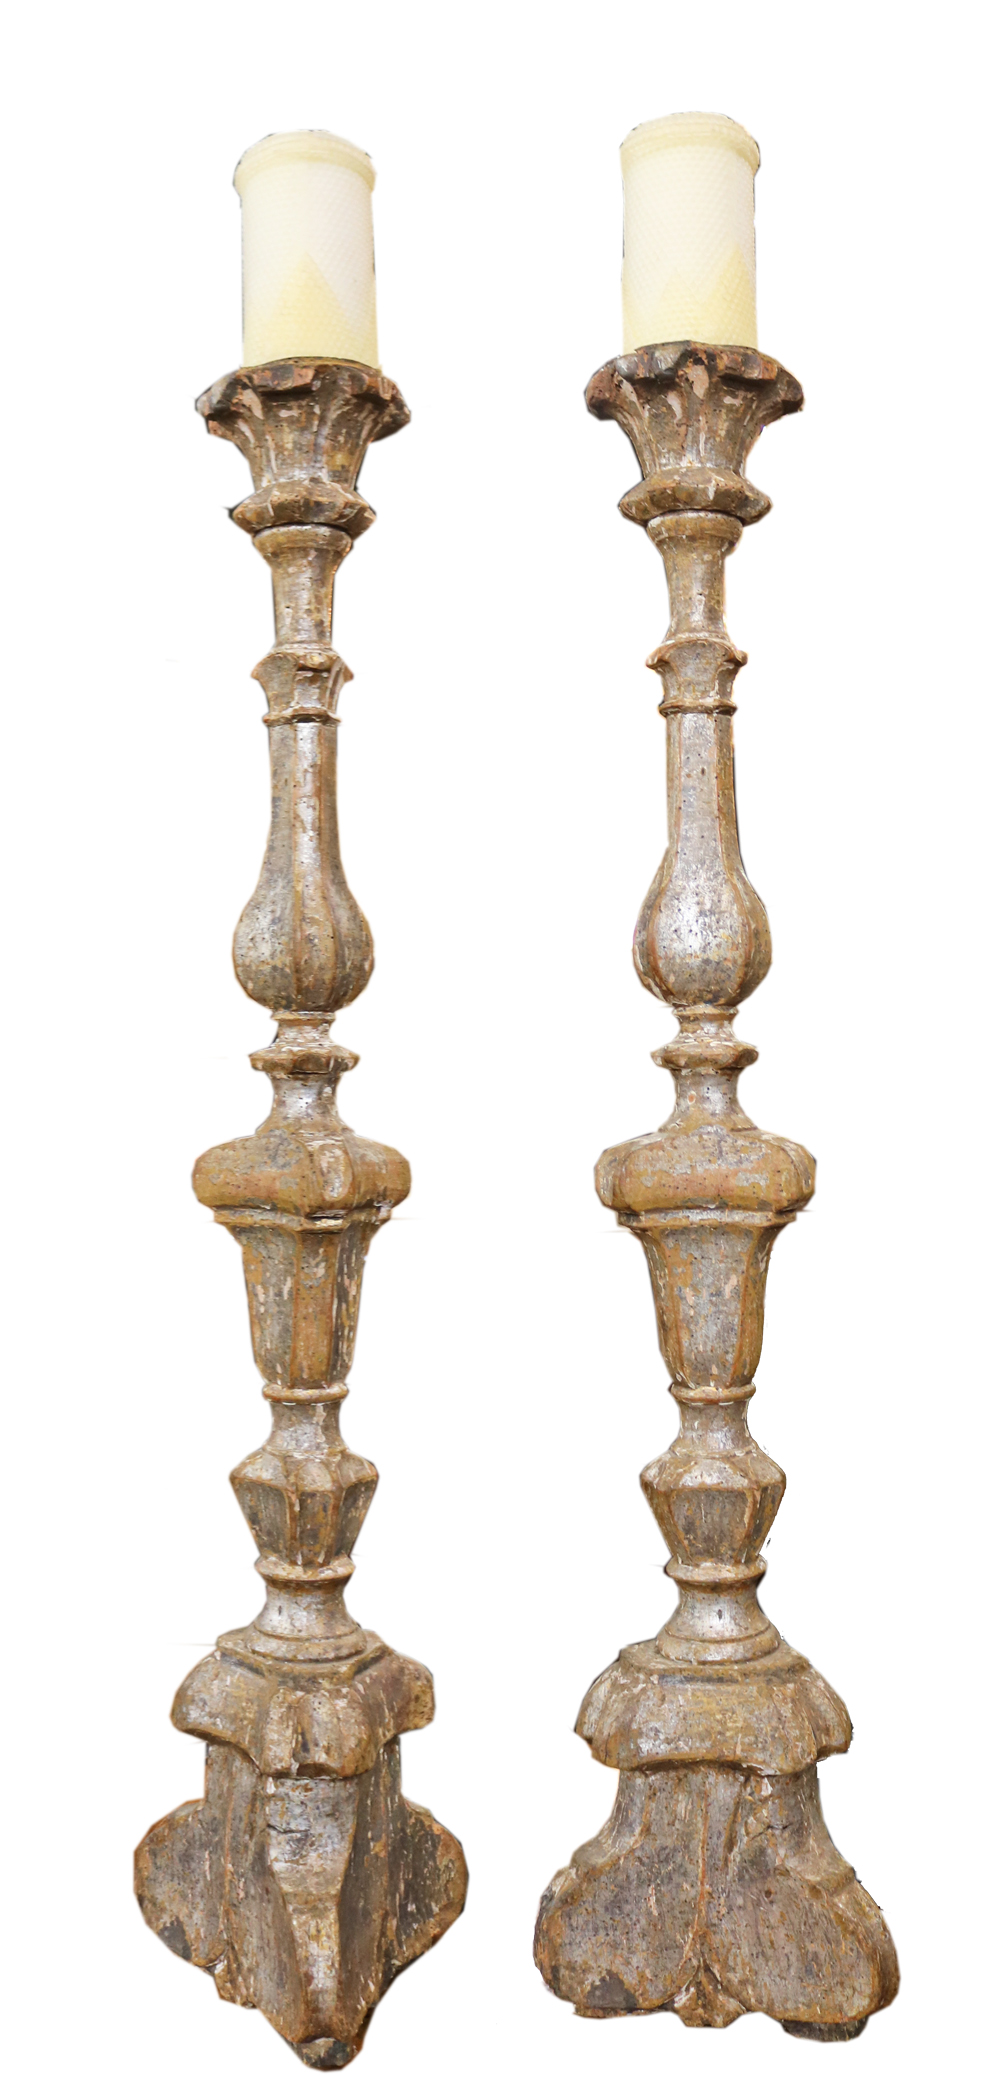 A Rare Pair of Grandly Scaled 16th Century Italian Pricket Sticks No. 4746